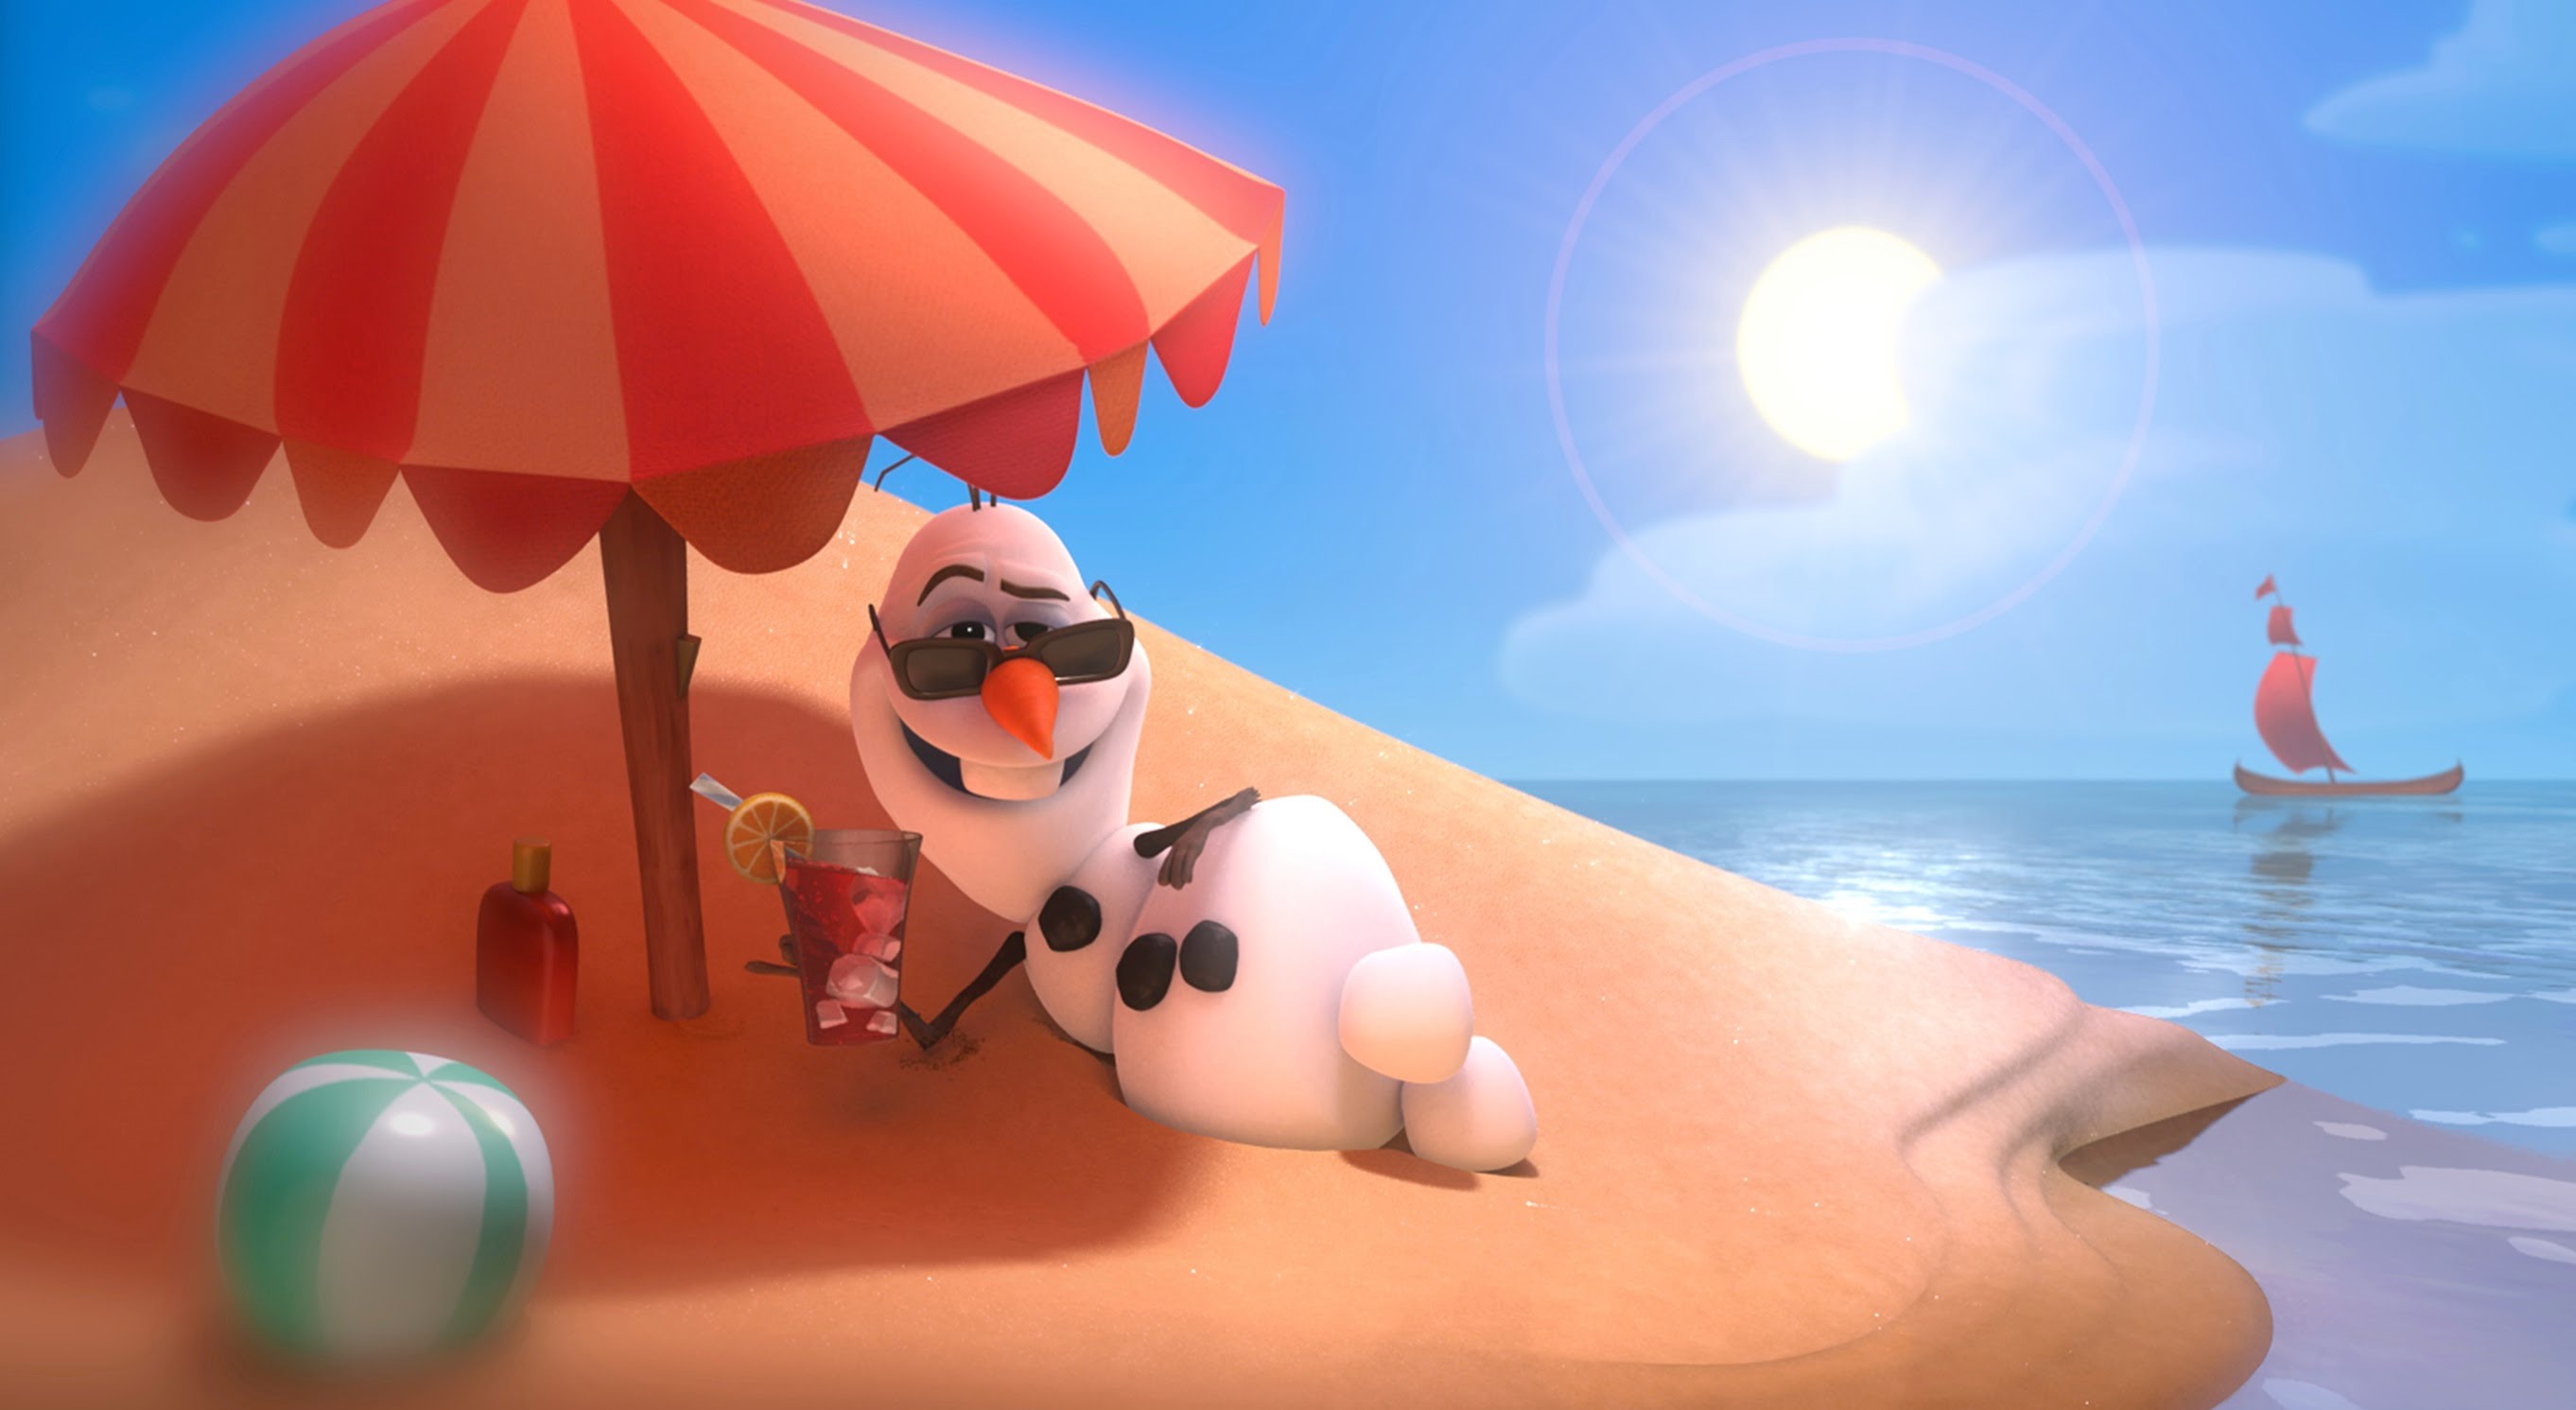 Olaf The Snowman From Disney S Frozen Sings In Summer